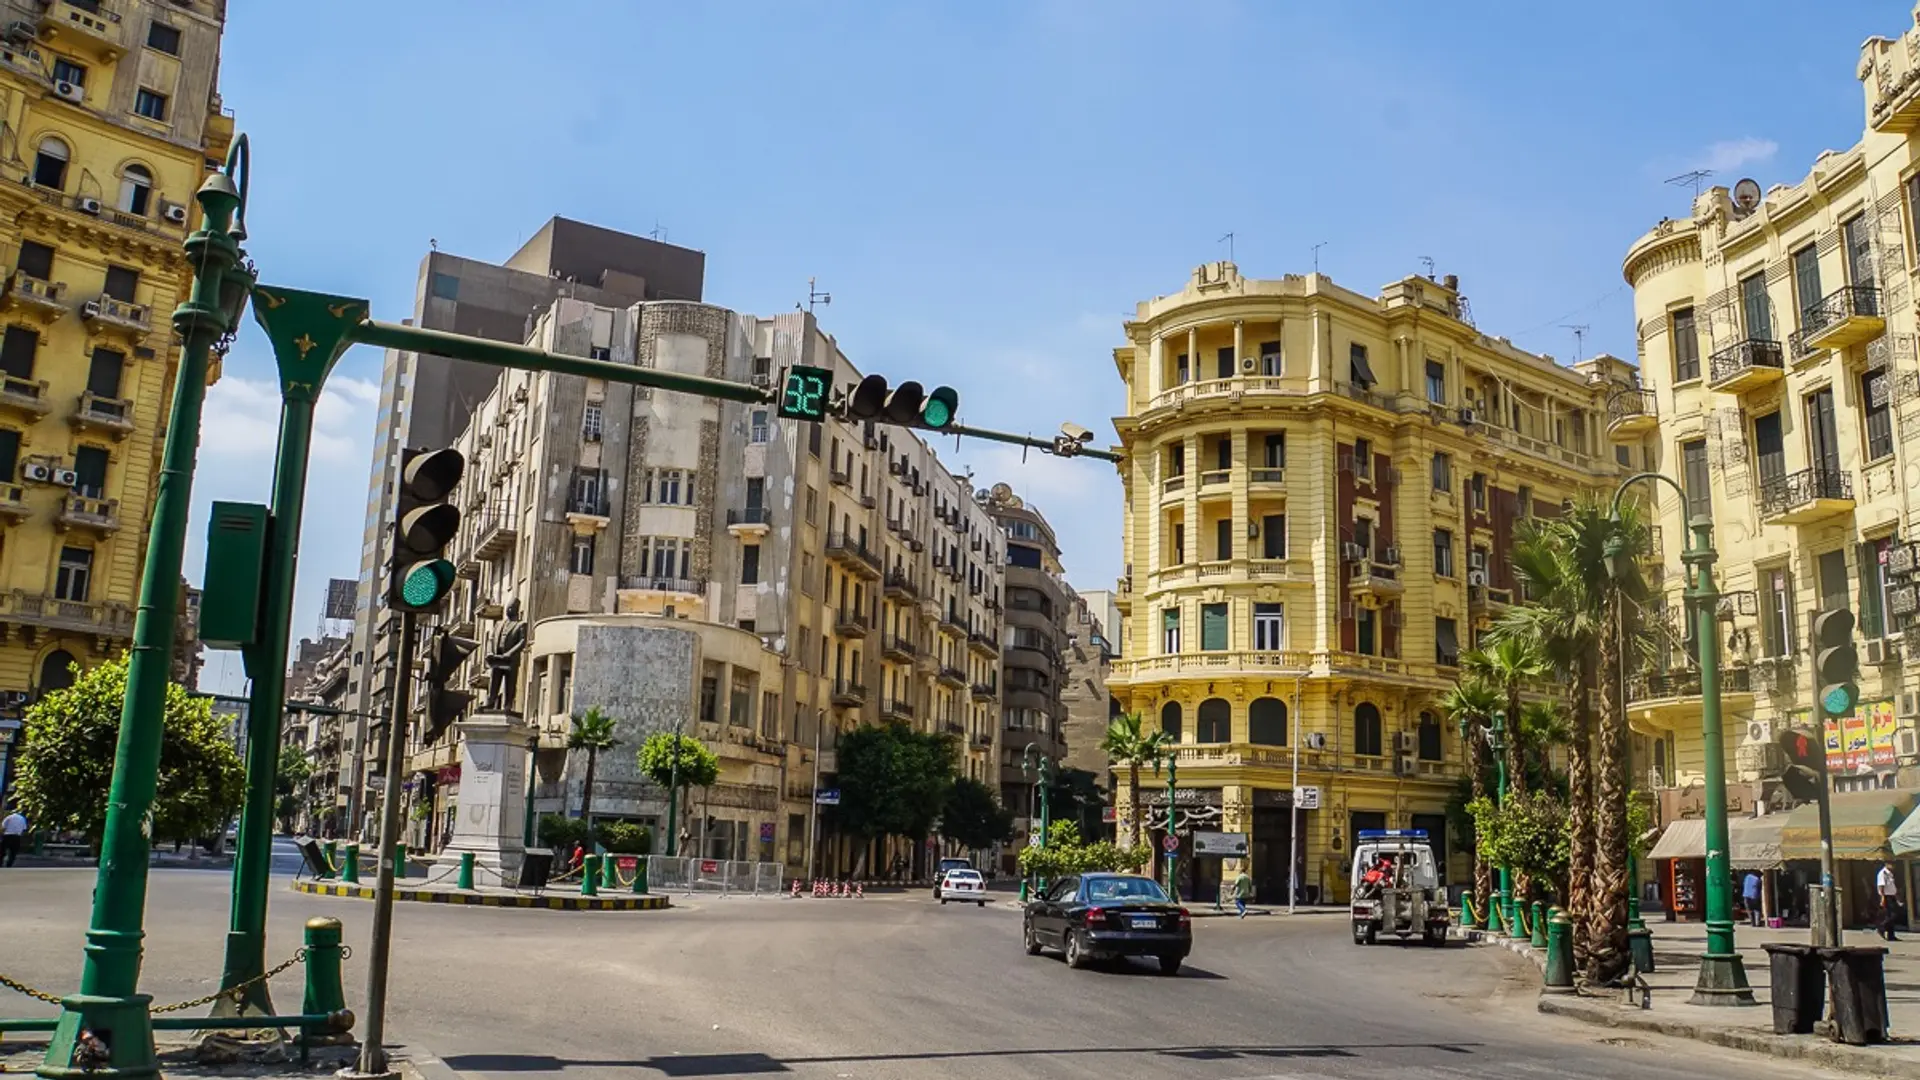 Destinations Articles - Cairo Travel Guide